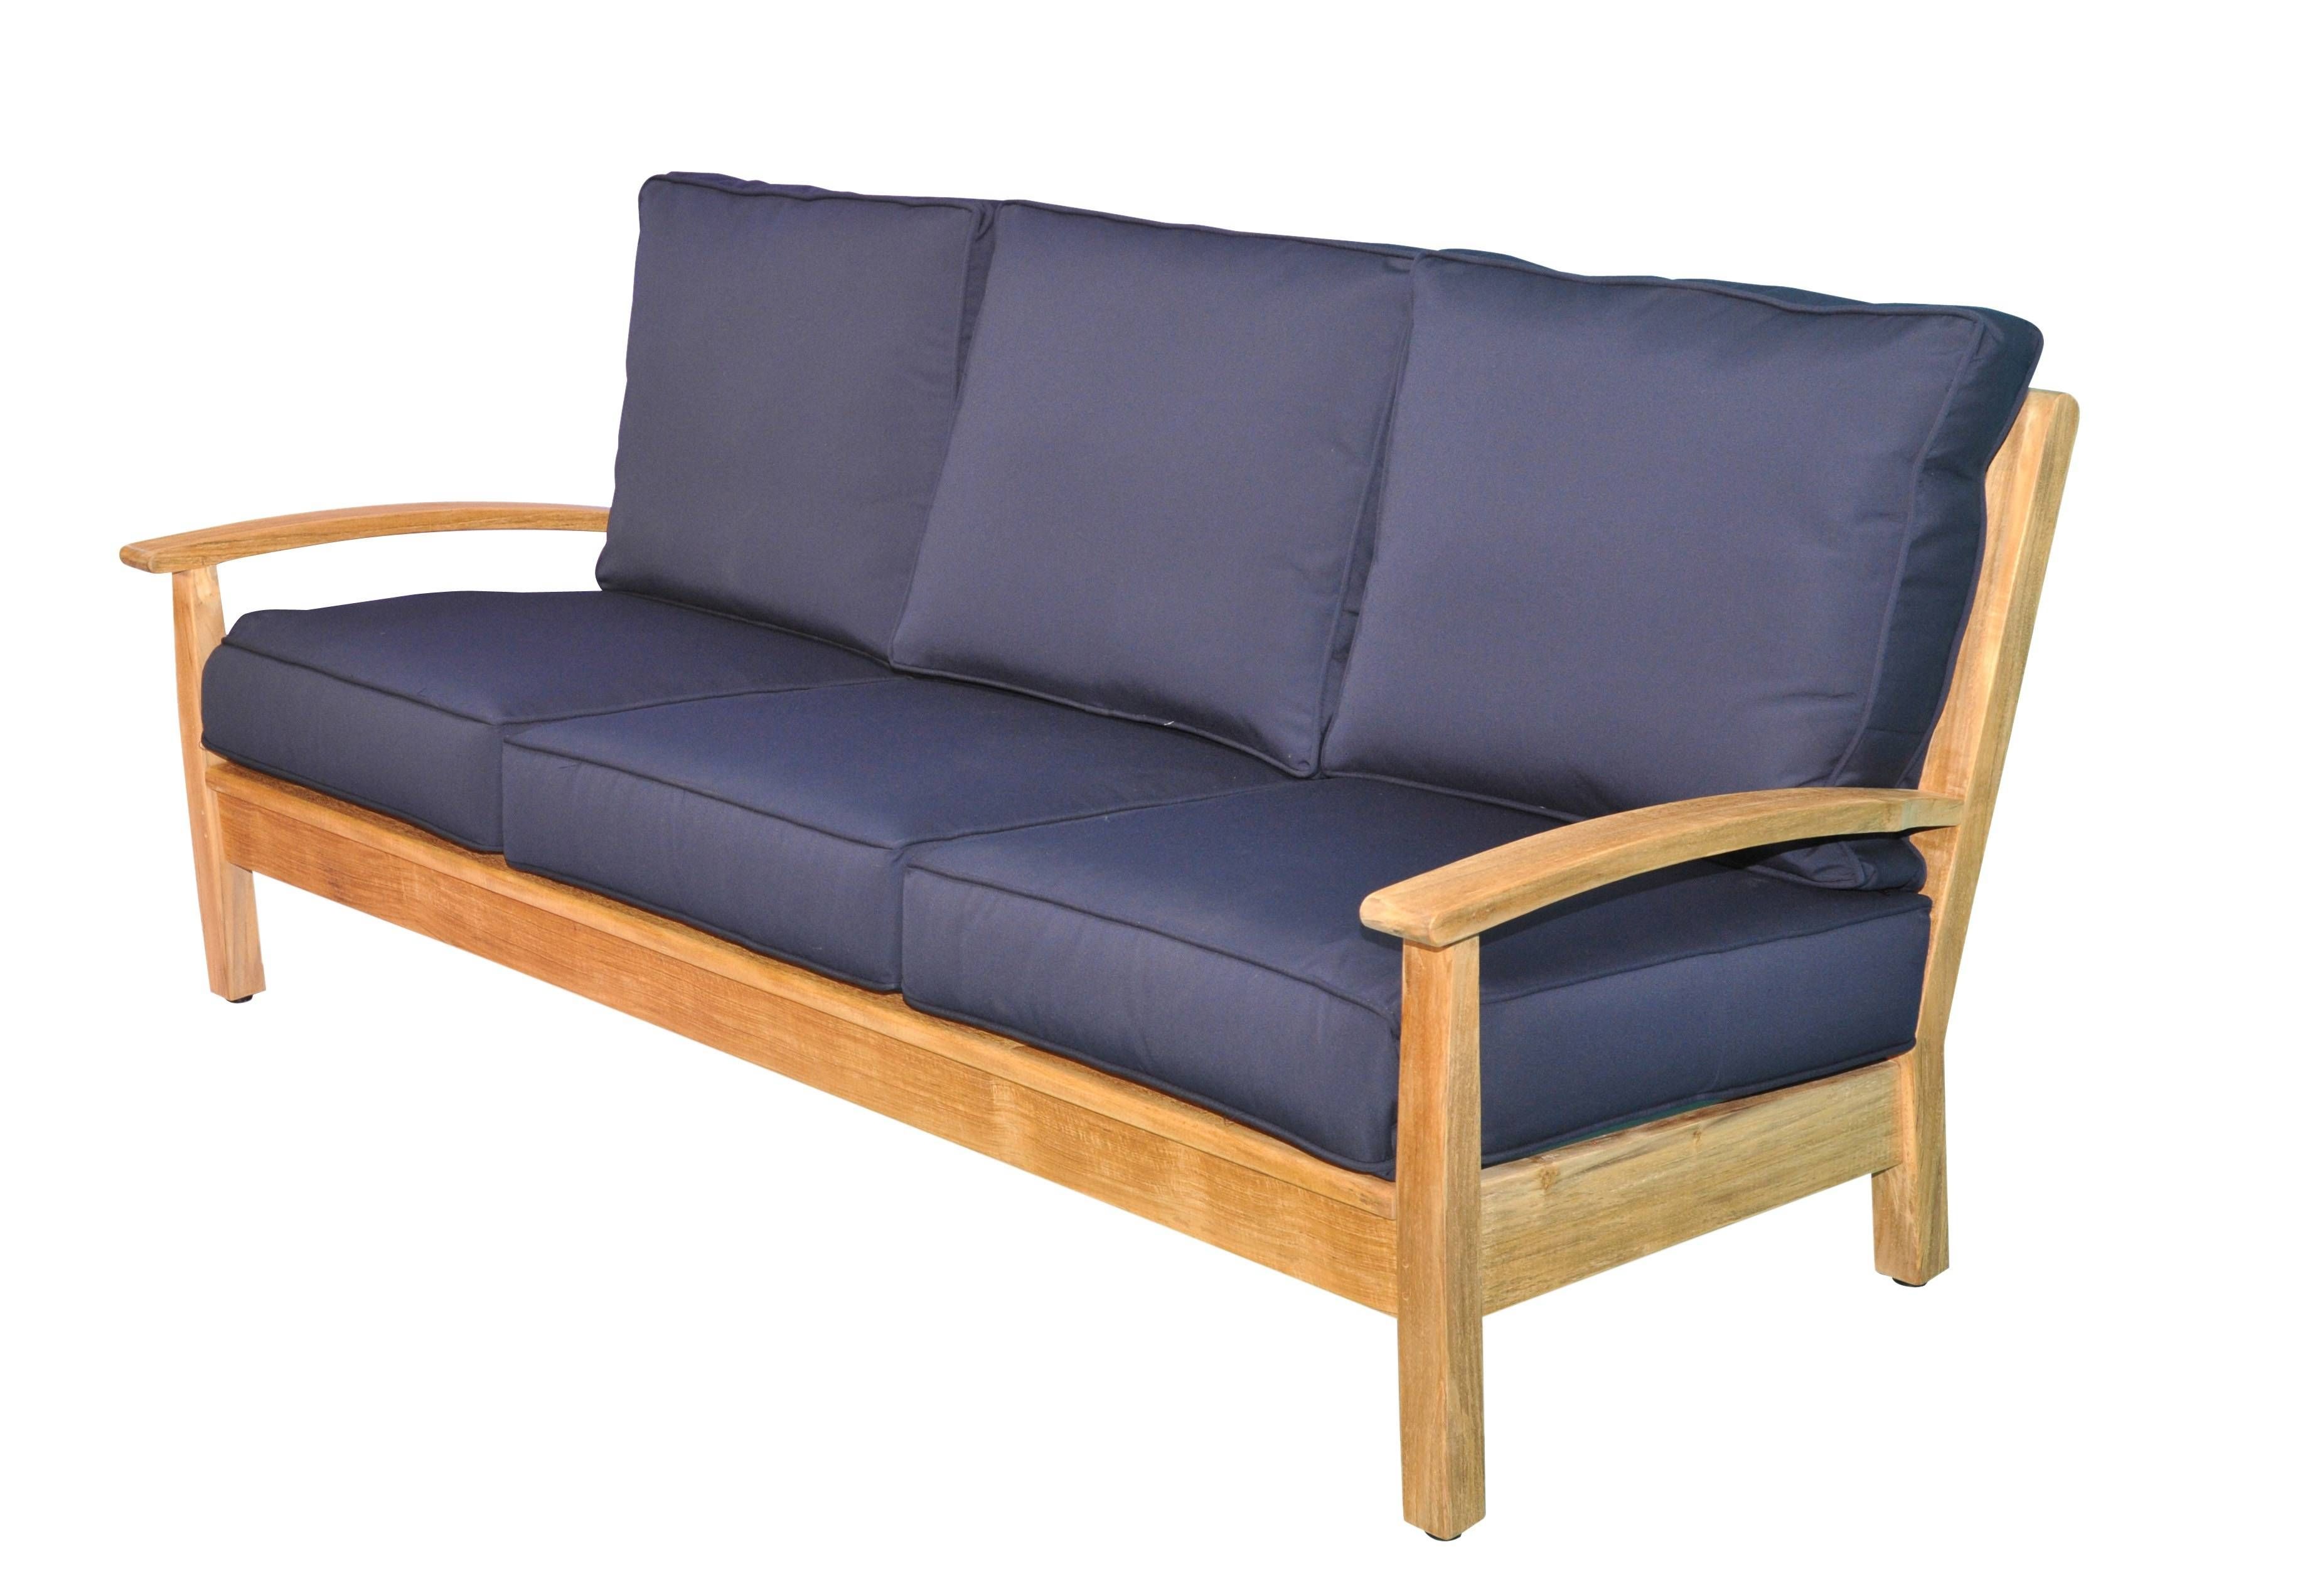 Furniture: Luxury Mid Century Modern Furniture Designviesso Regarding Small Modern Sofas (View 8 of 15)